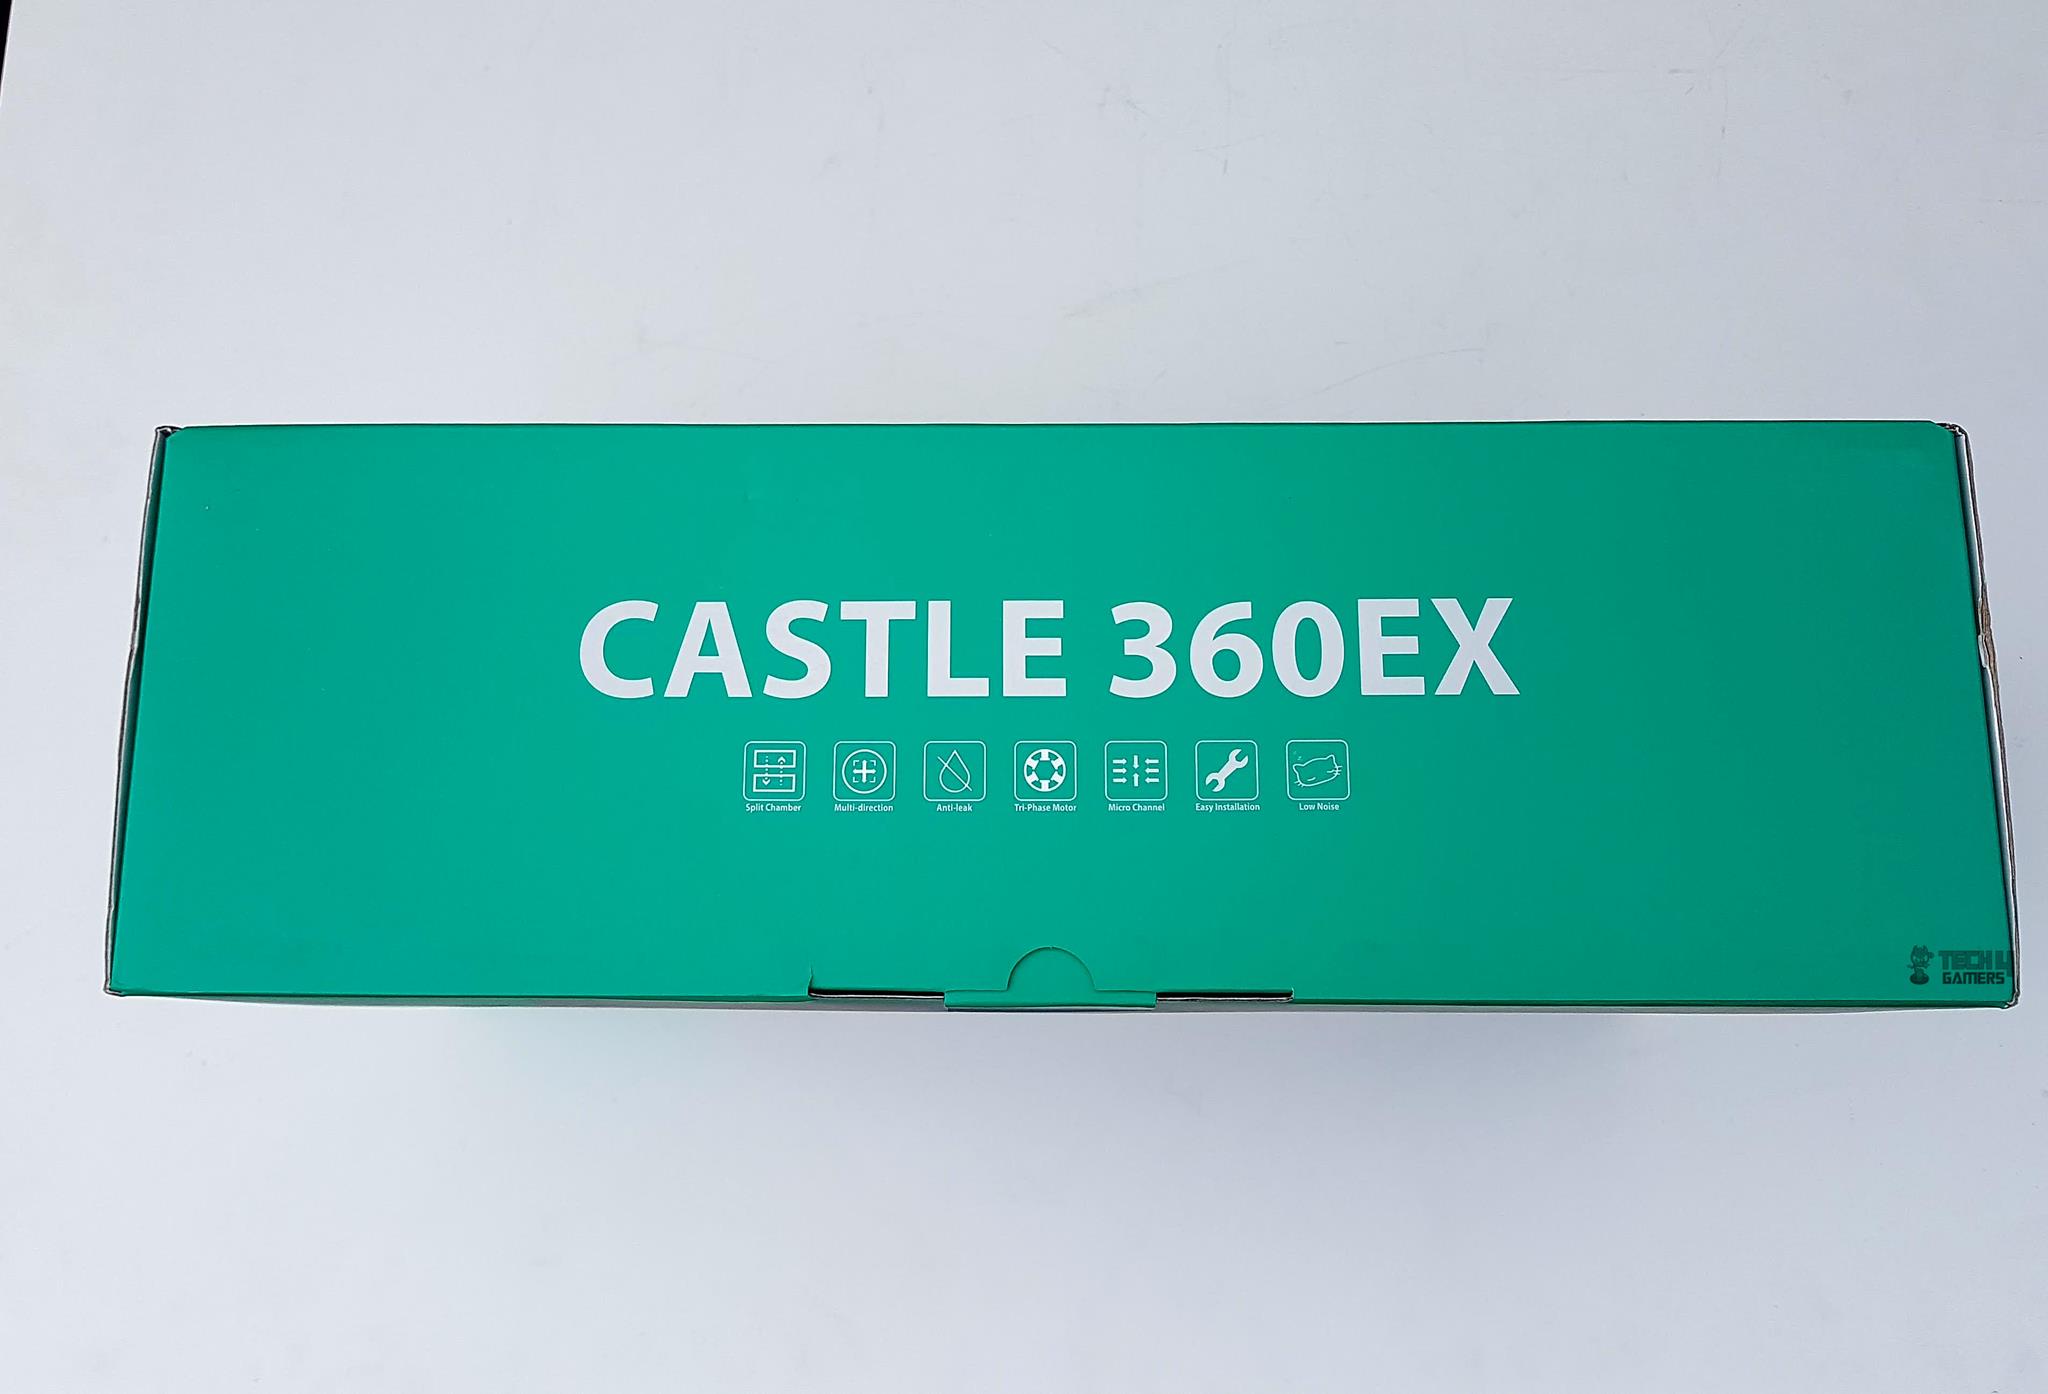  castle 360ex Packaging 